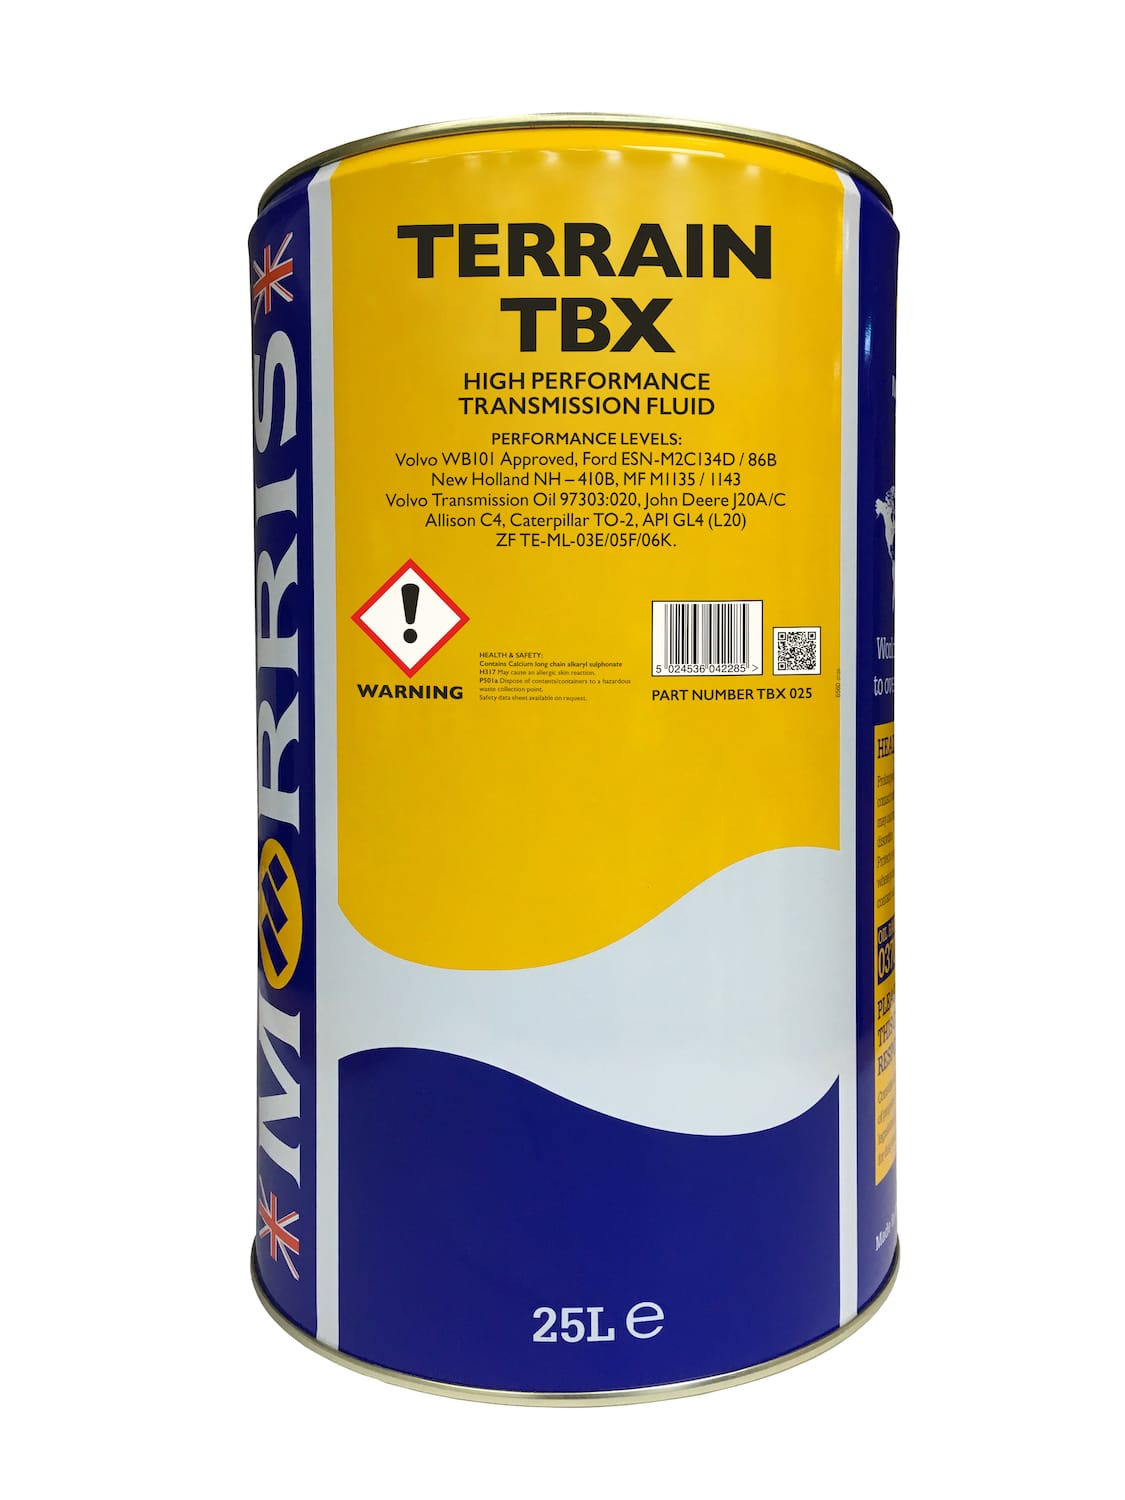 Terrain TBX